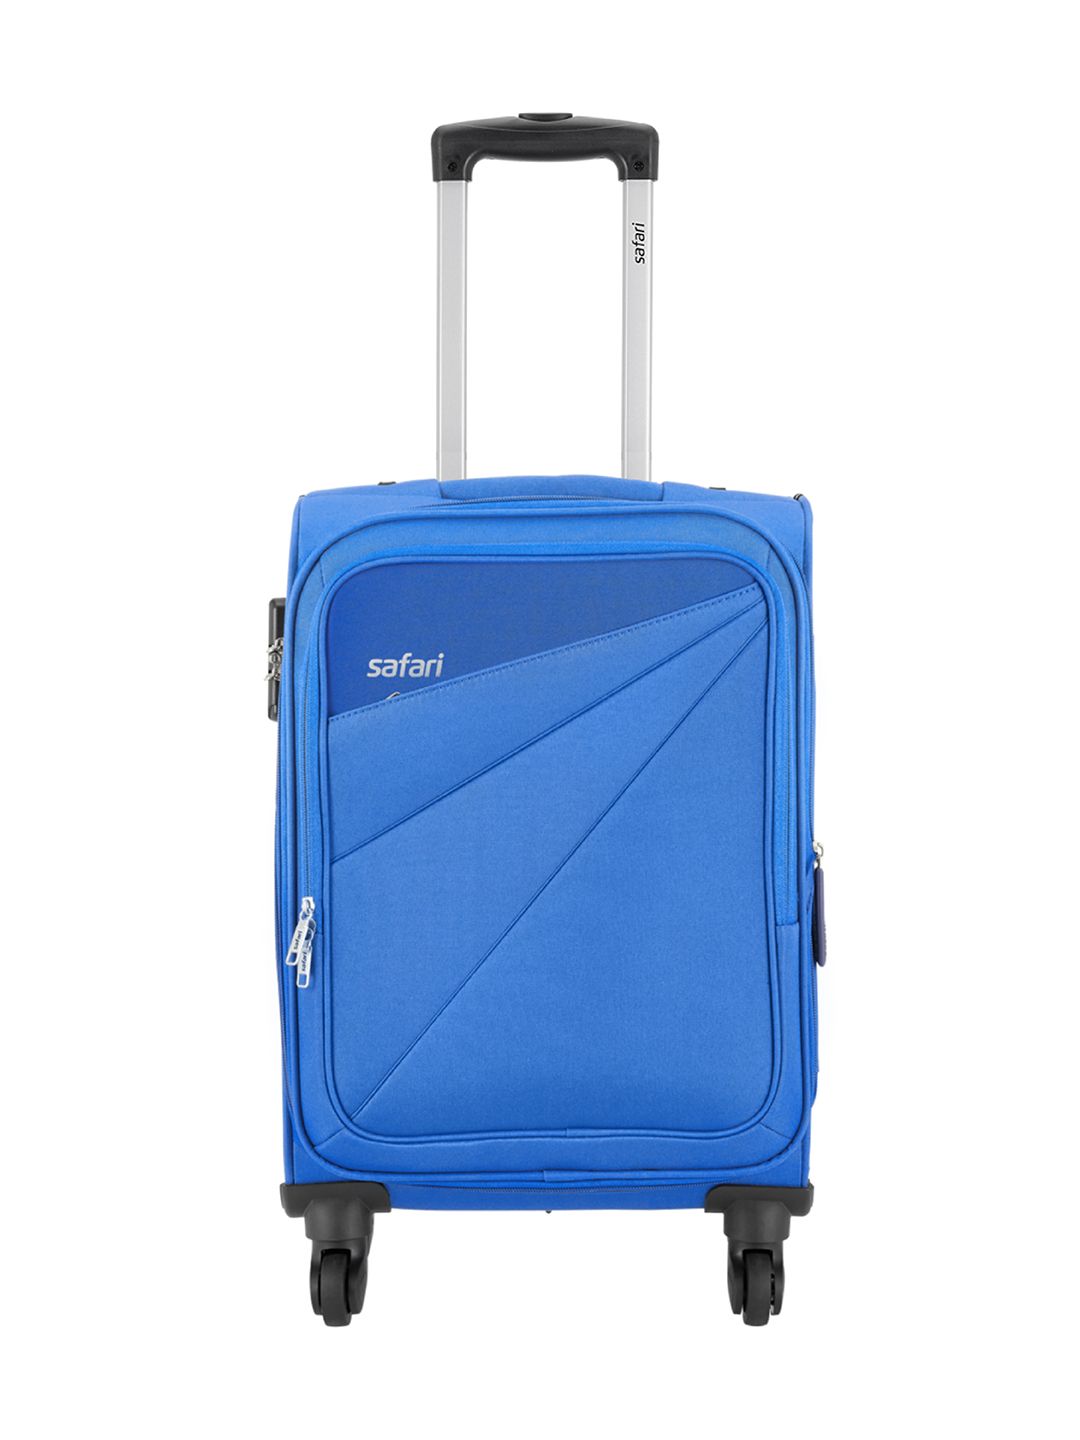 Safari Unisex Blue Mimik Cabin Trolley Bag Price in India